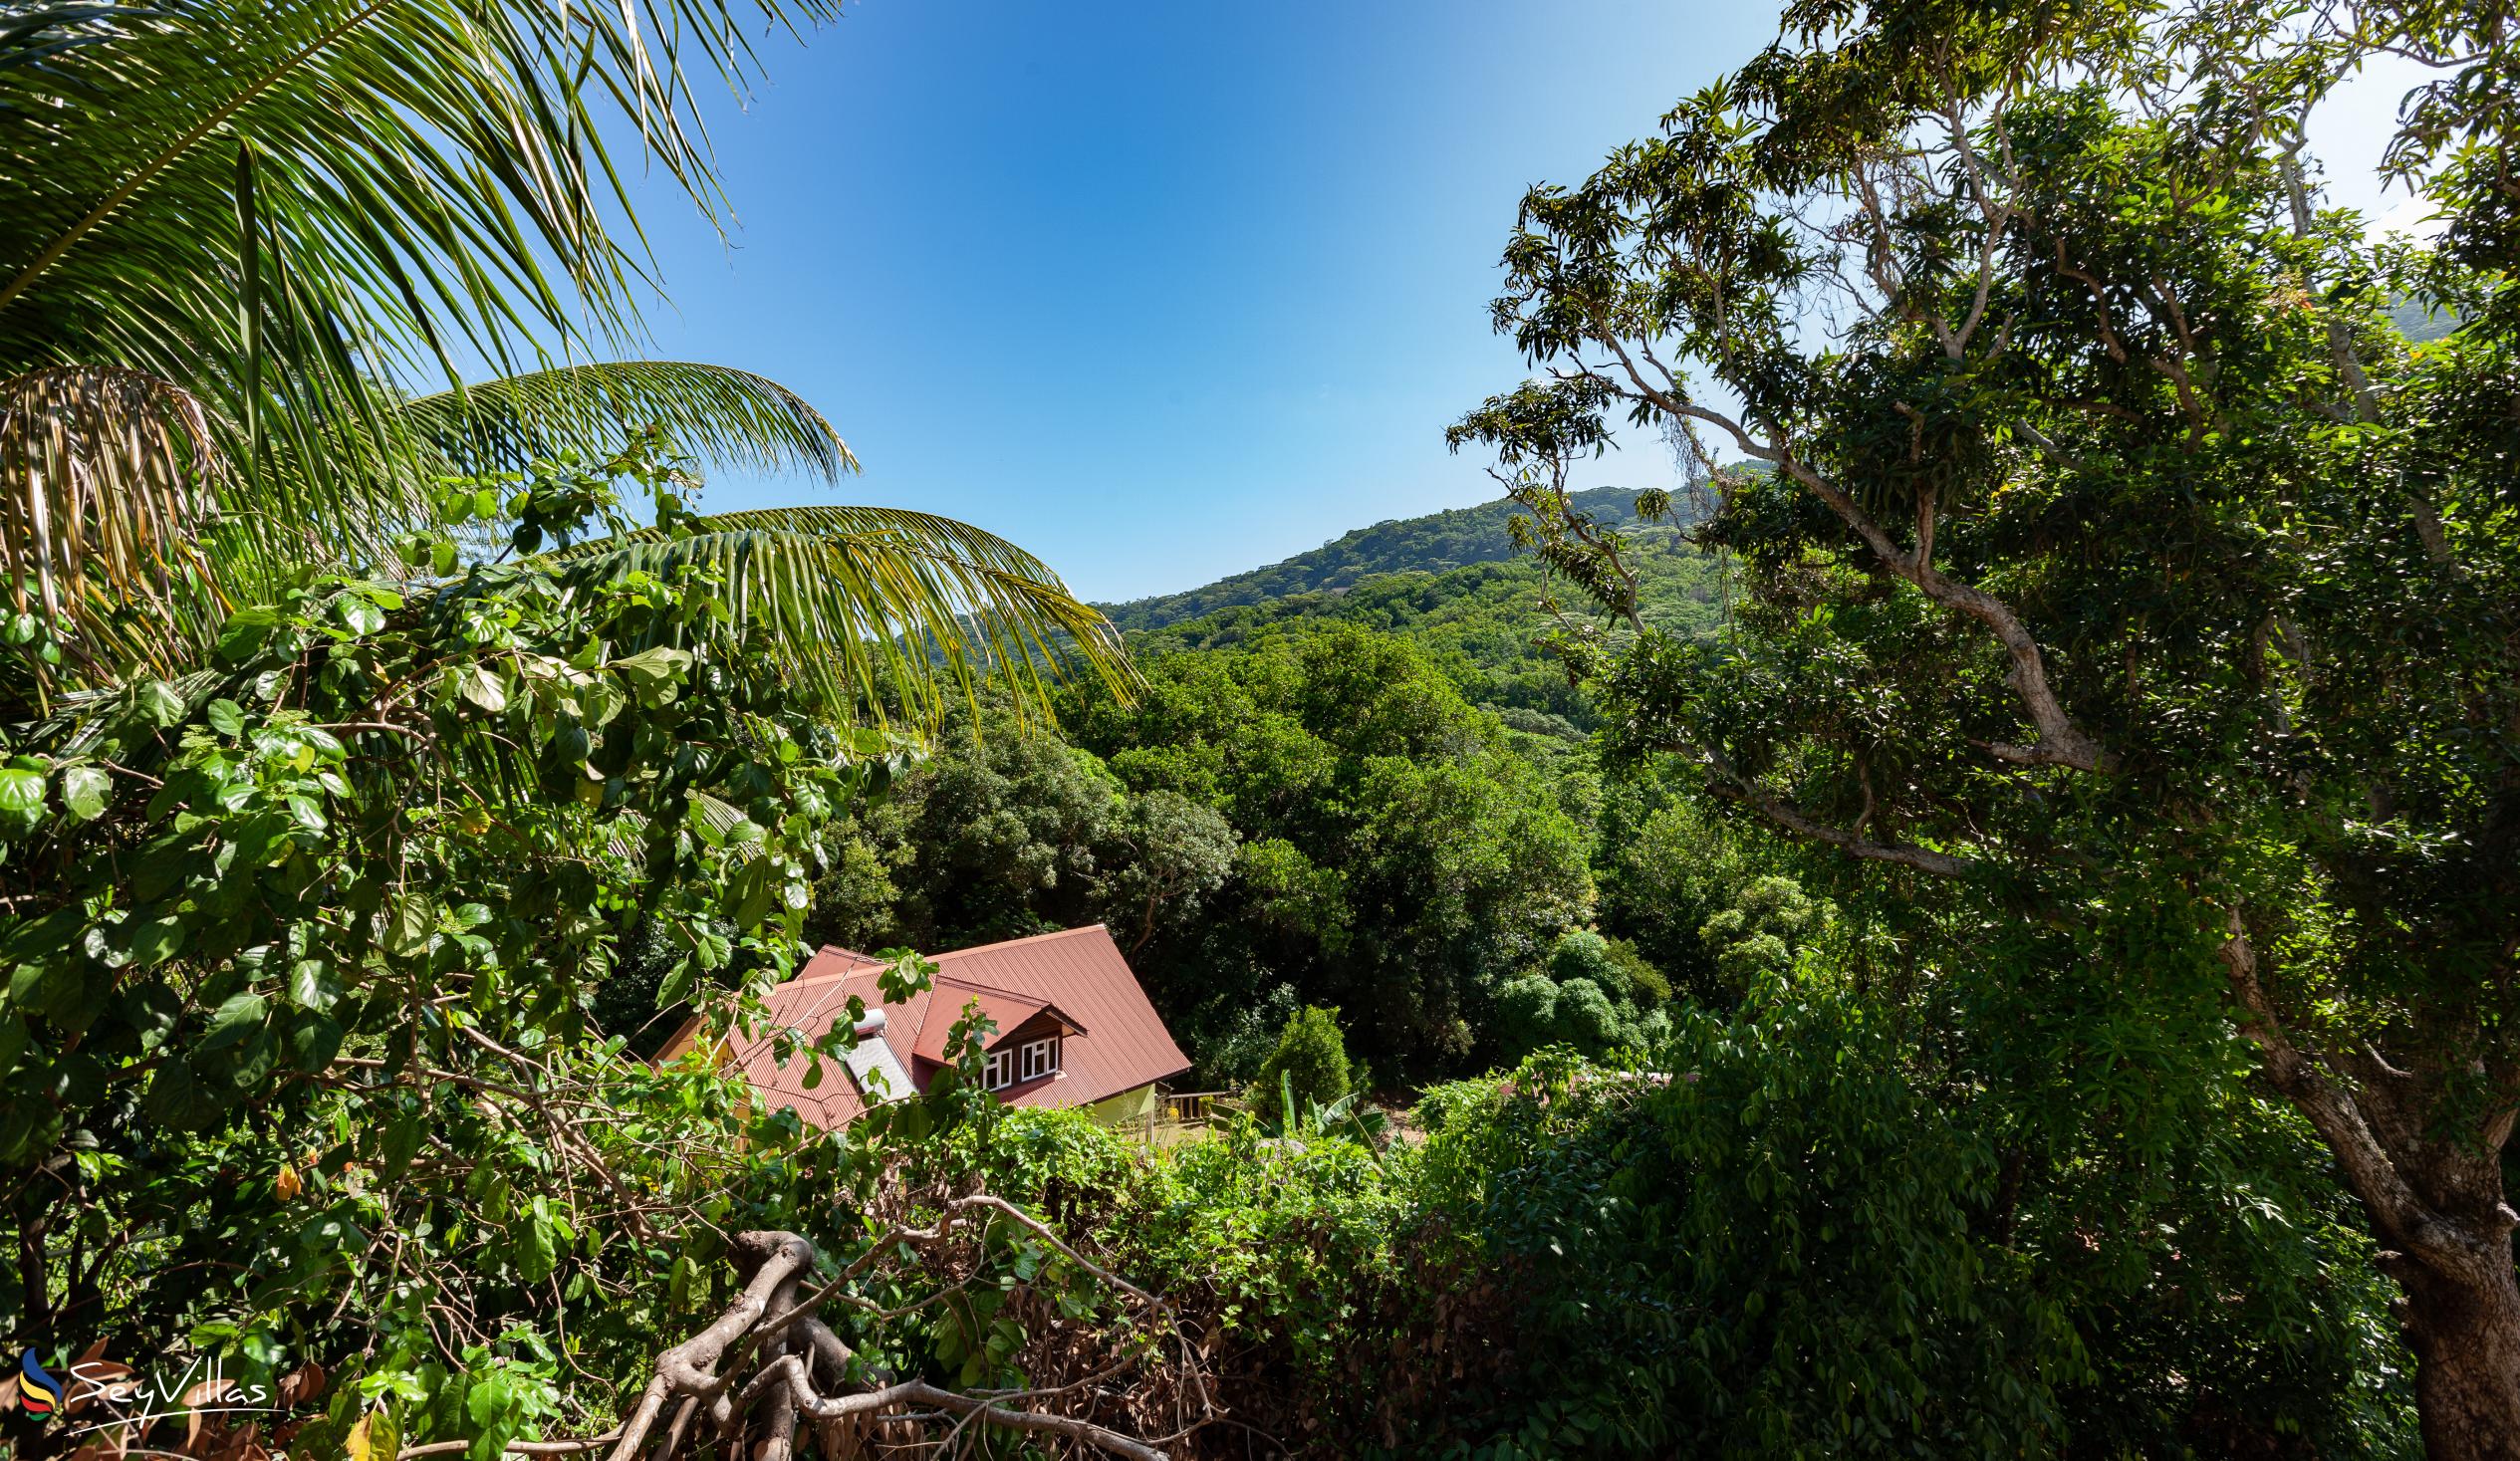 Foto 20: Mountain View Hotel - Location - La Digue (Seychelles)